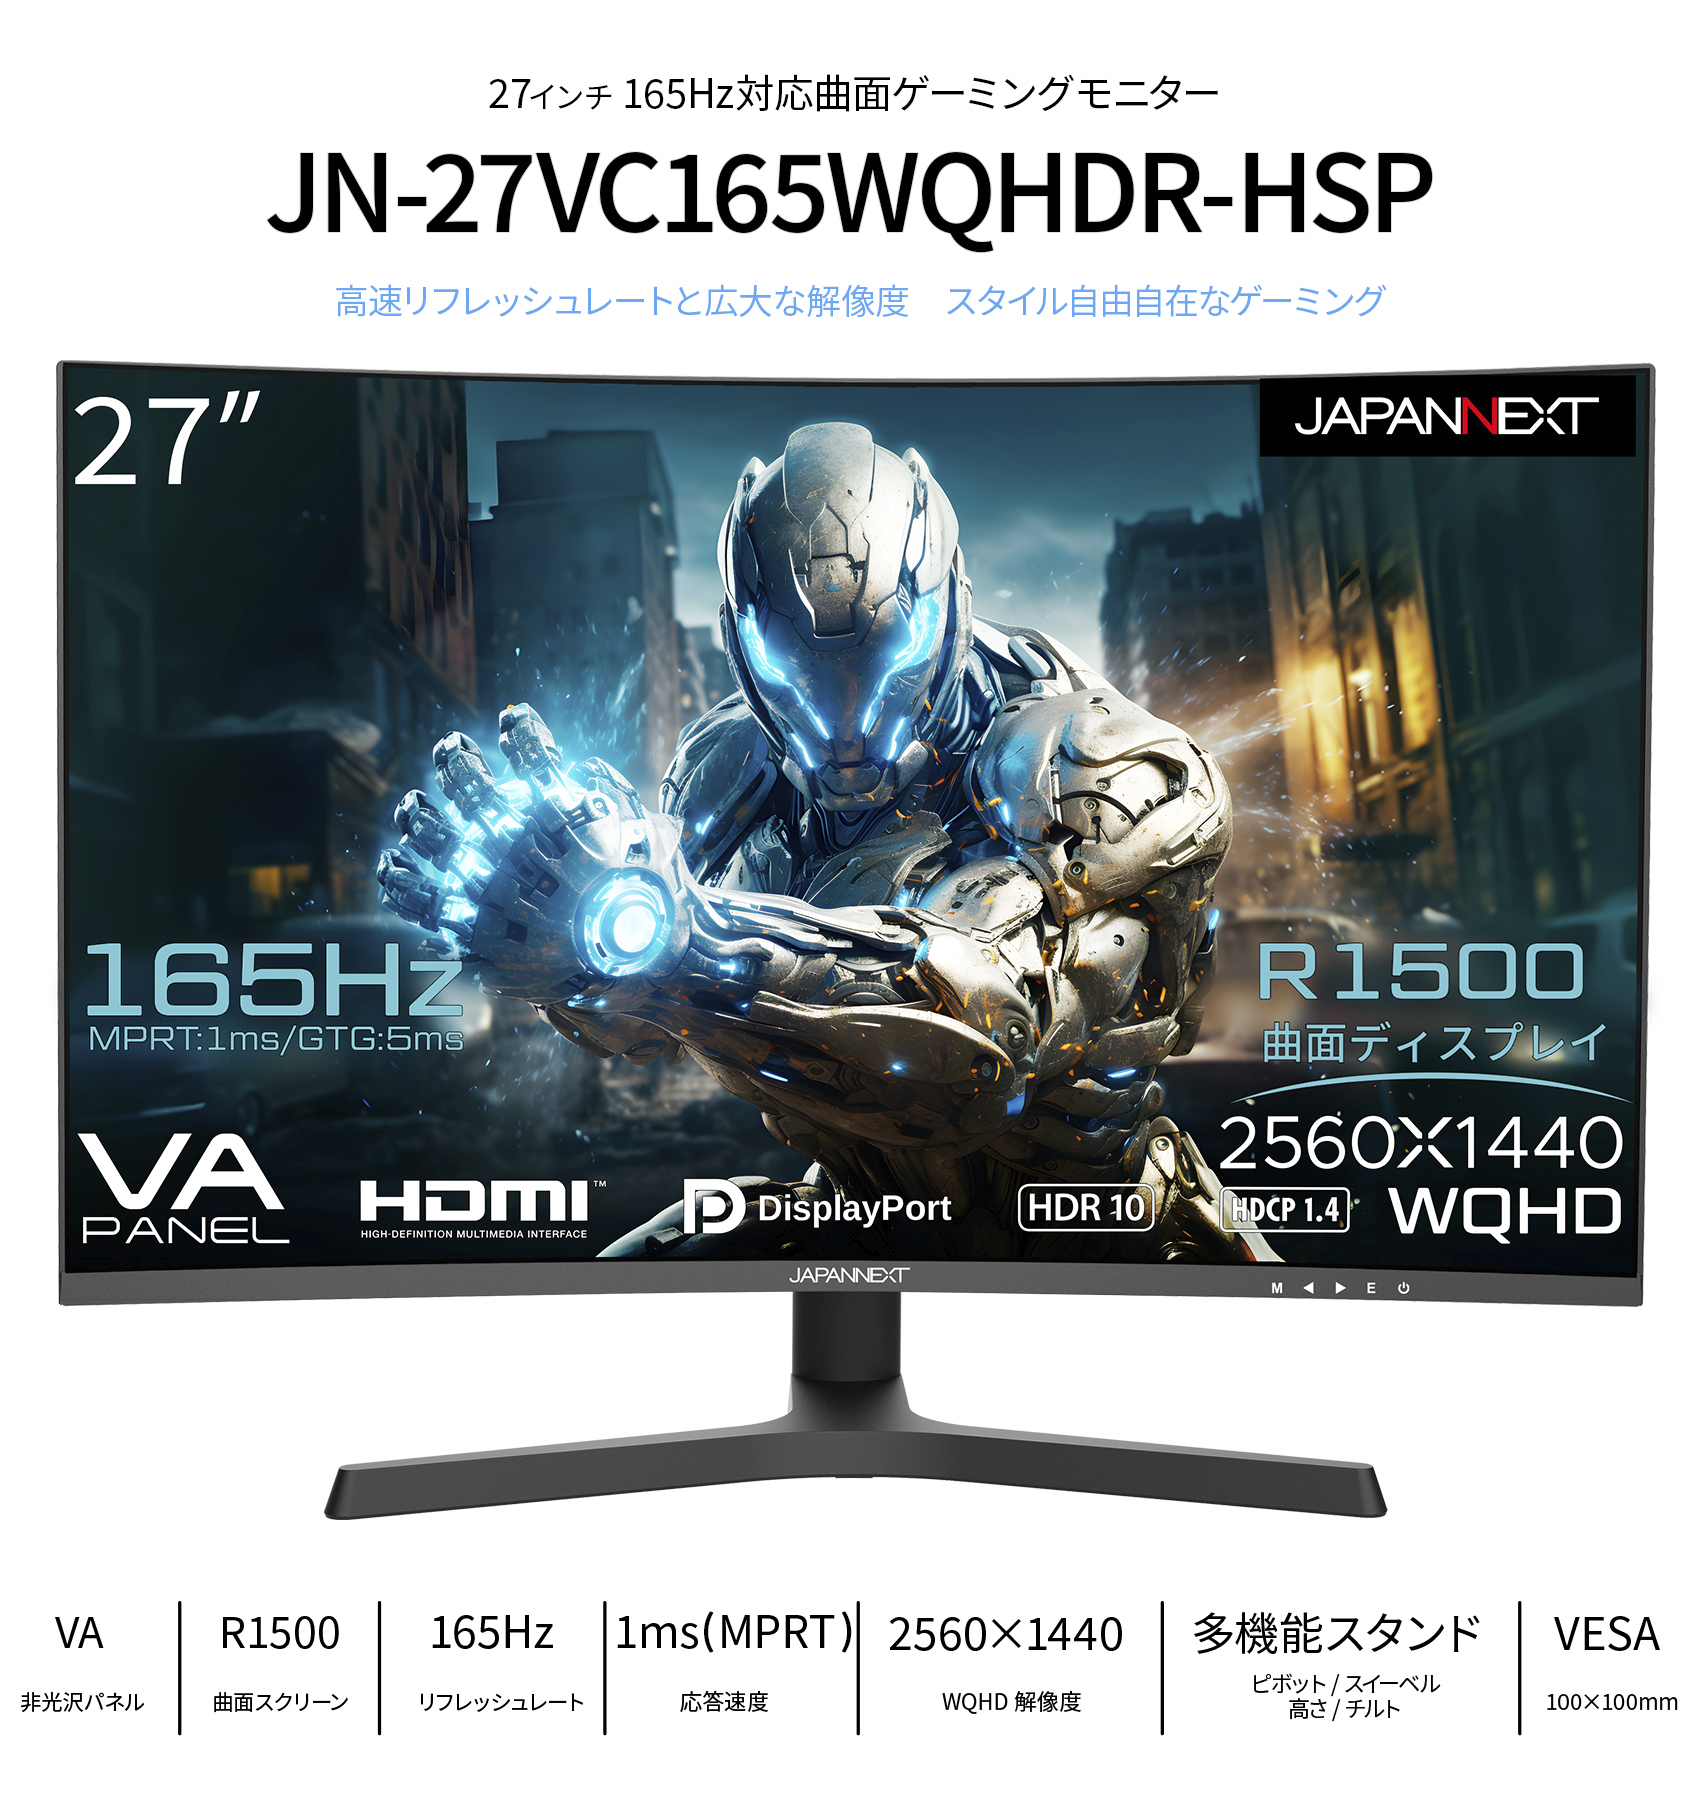 JAPANNEXT 27インチ 曲面 WQHD(2560 x 1440) 165Hz 液晶モニター JN